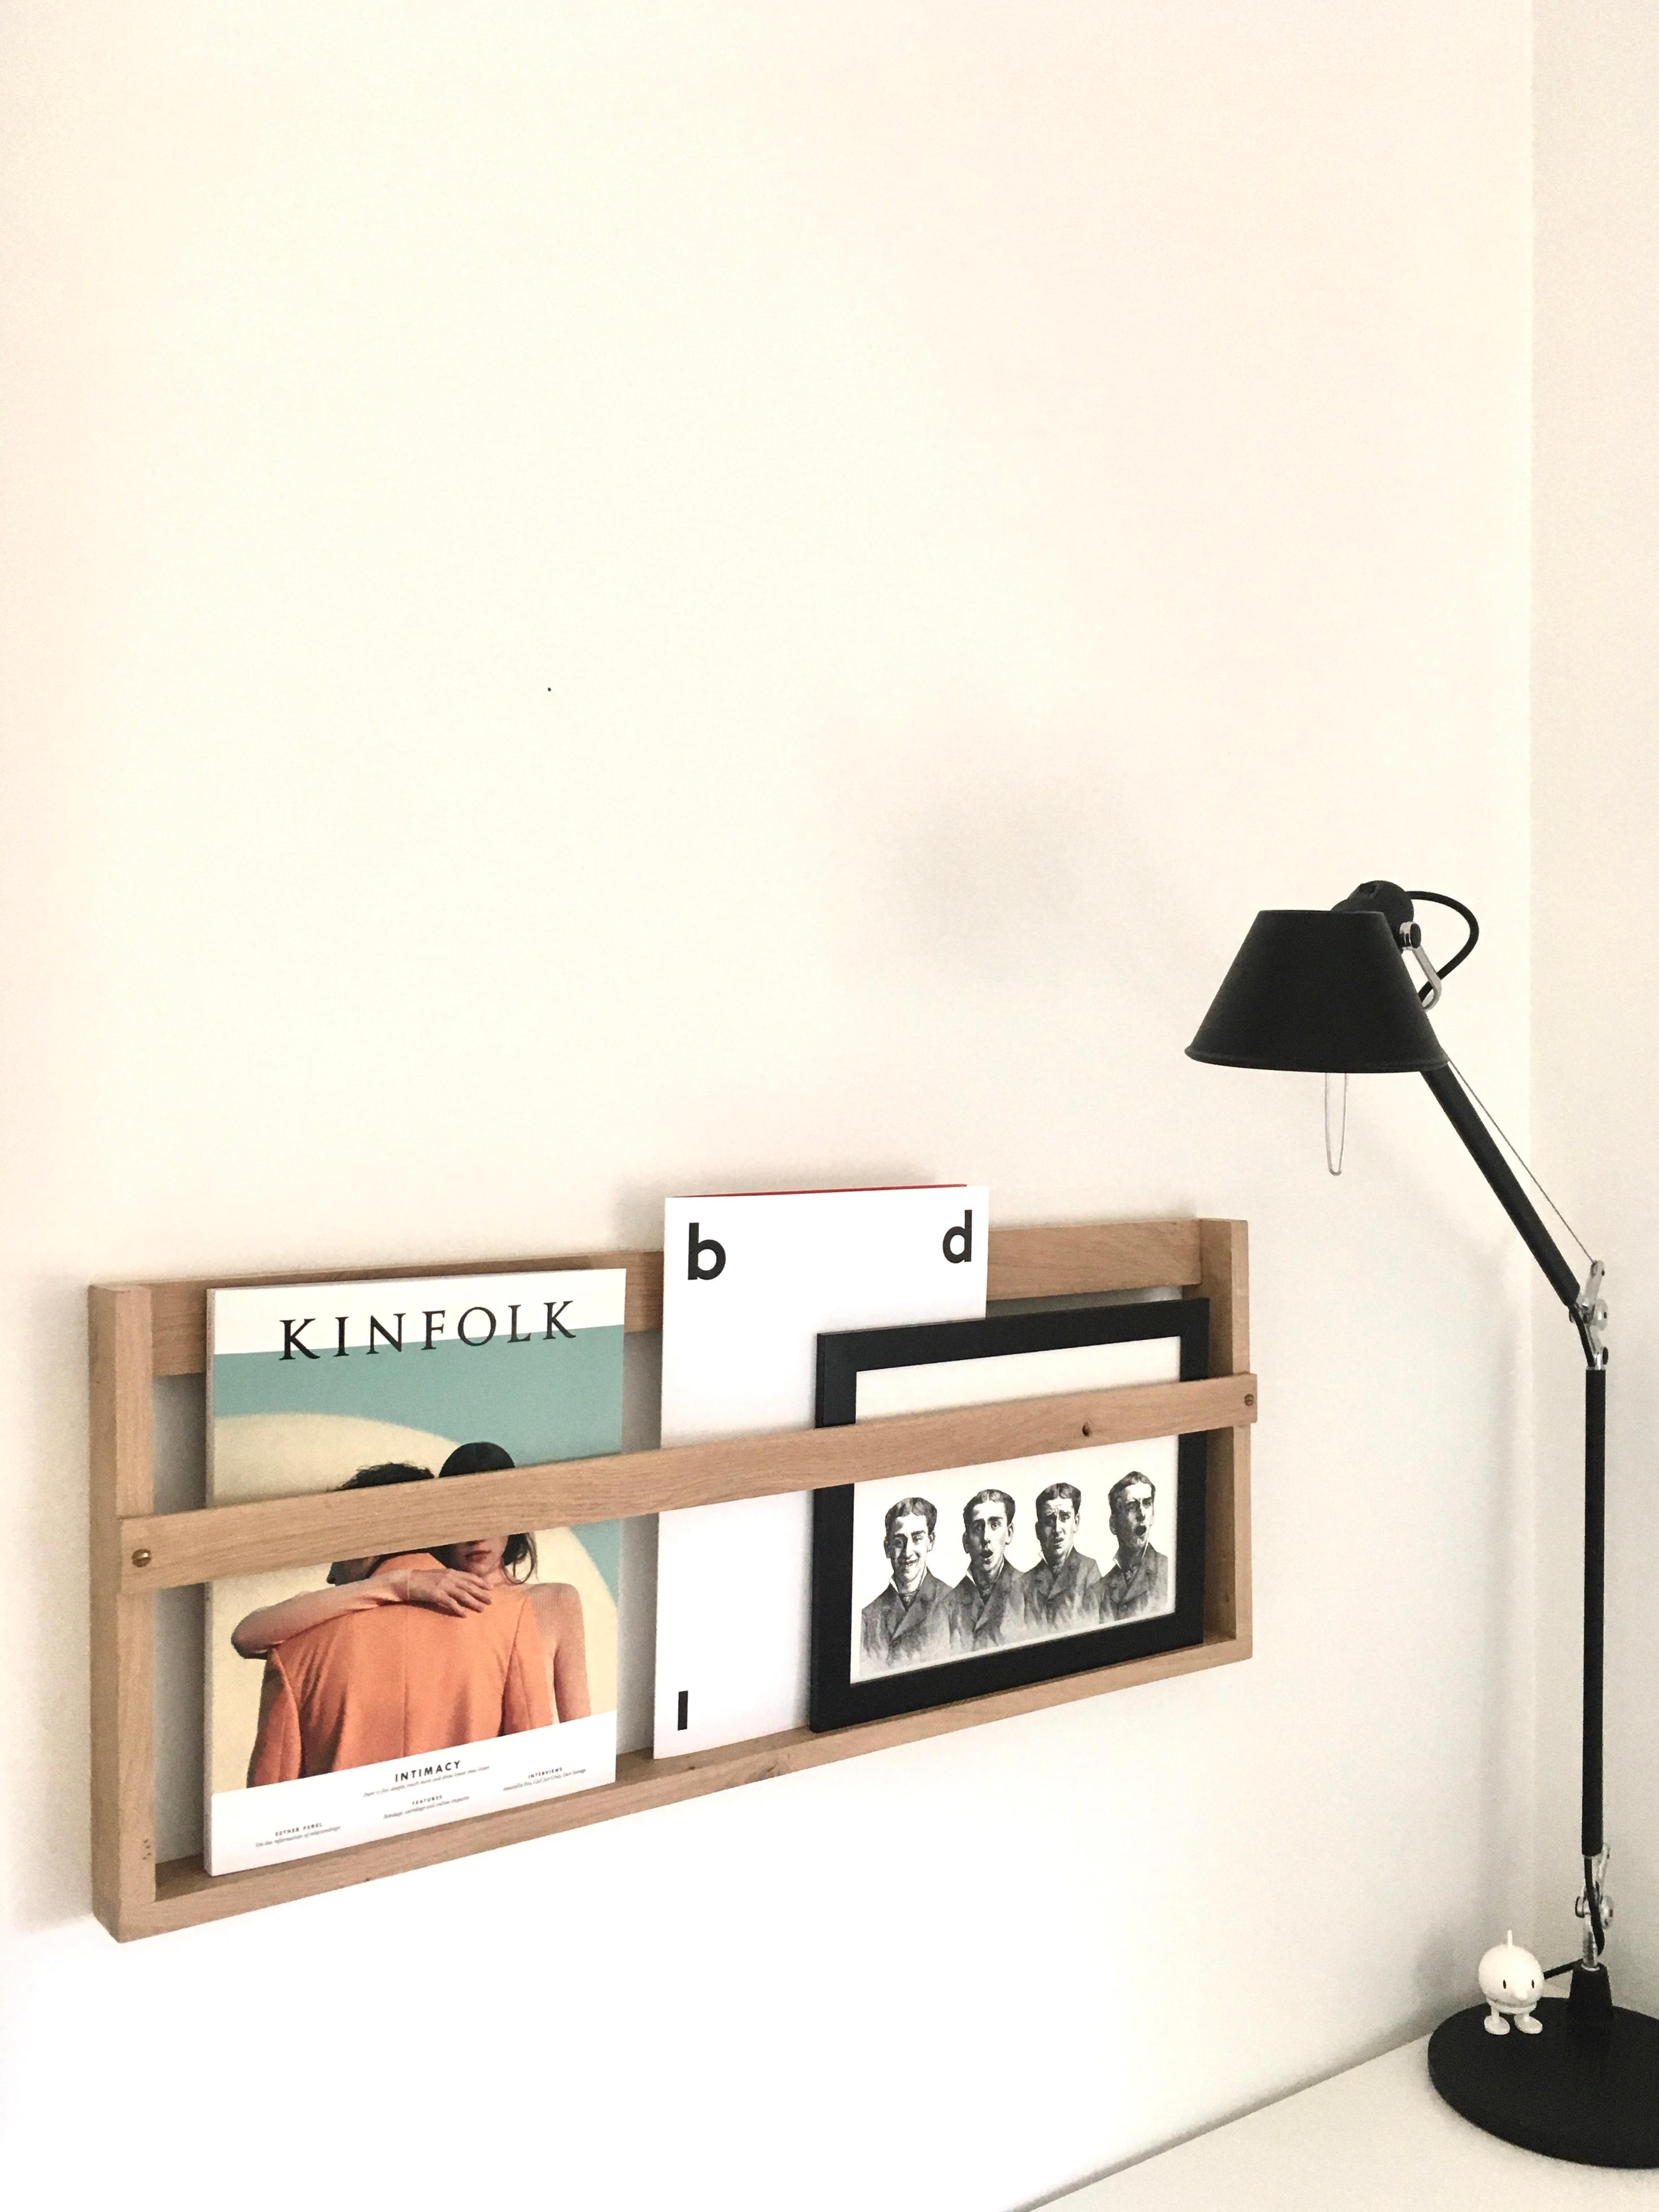 magazine shelf ❤️
#desk #homeoffice #tolomeo #artemide #diy 